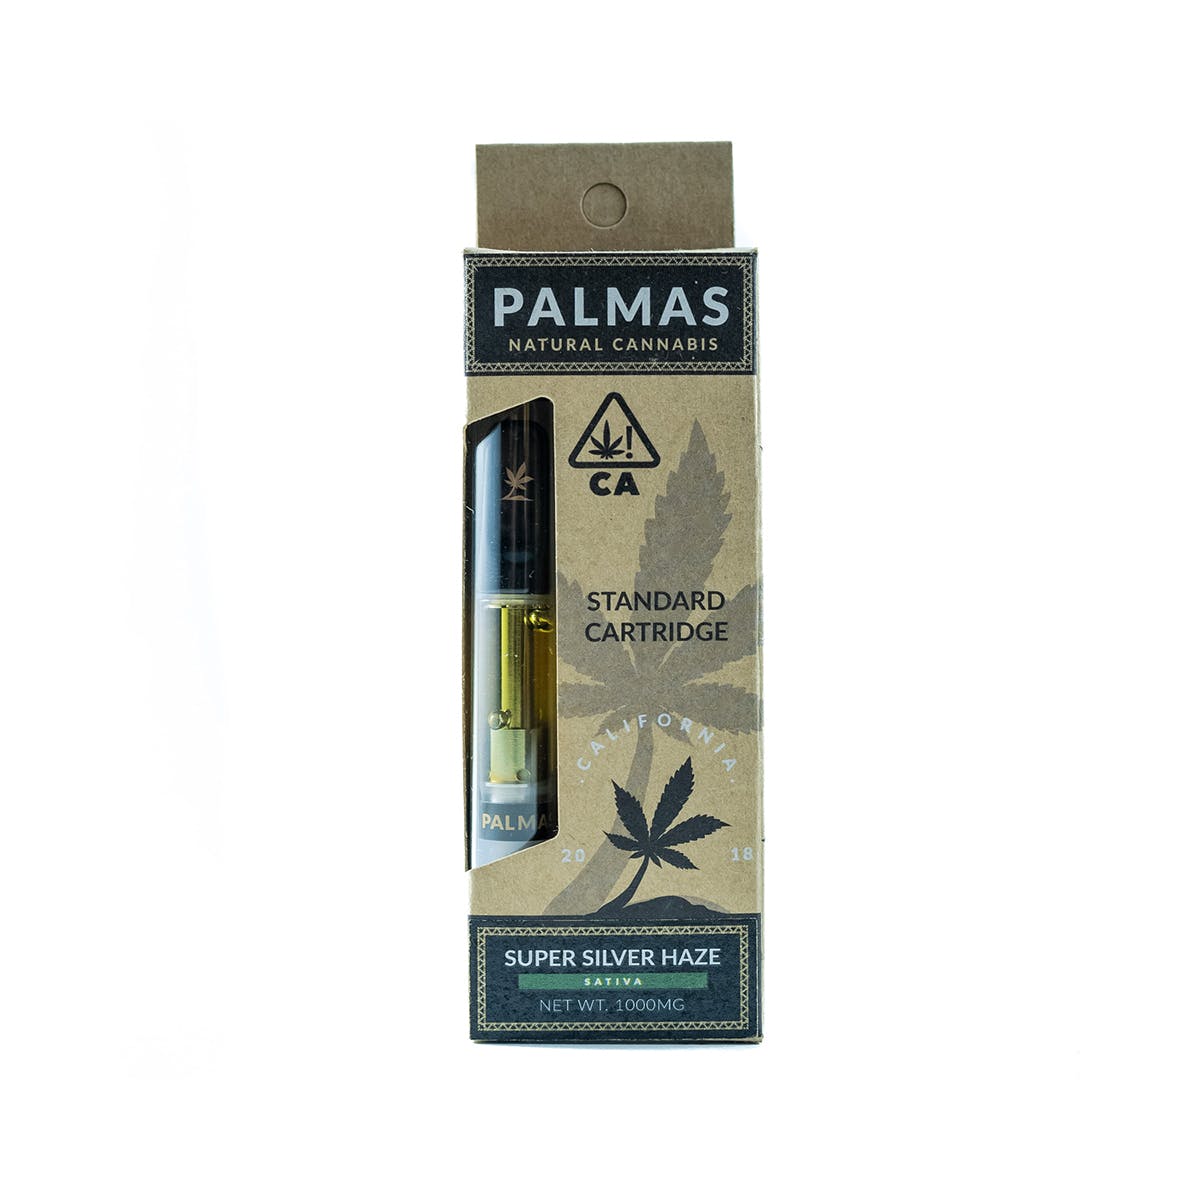 marijuana-dispensaries-kush-club-20-in-los-angeles-palmas-standard-cartridge-super-silver-haze